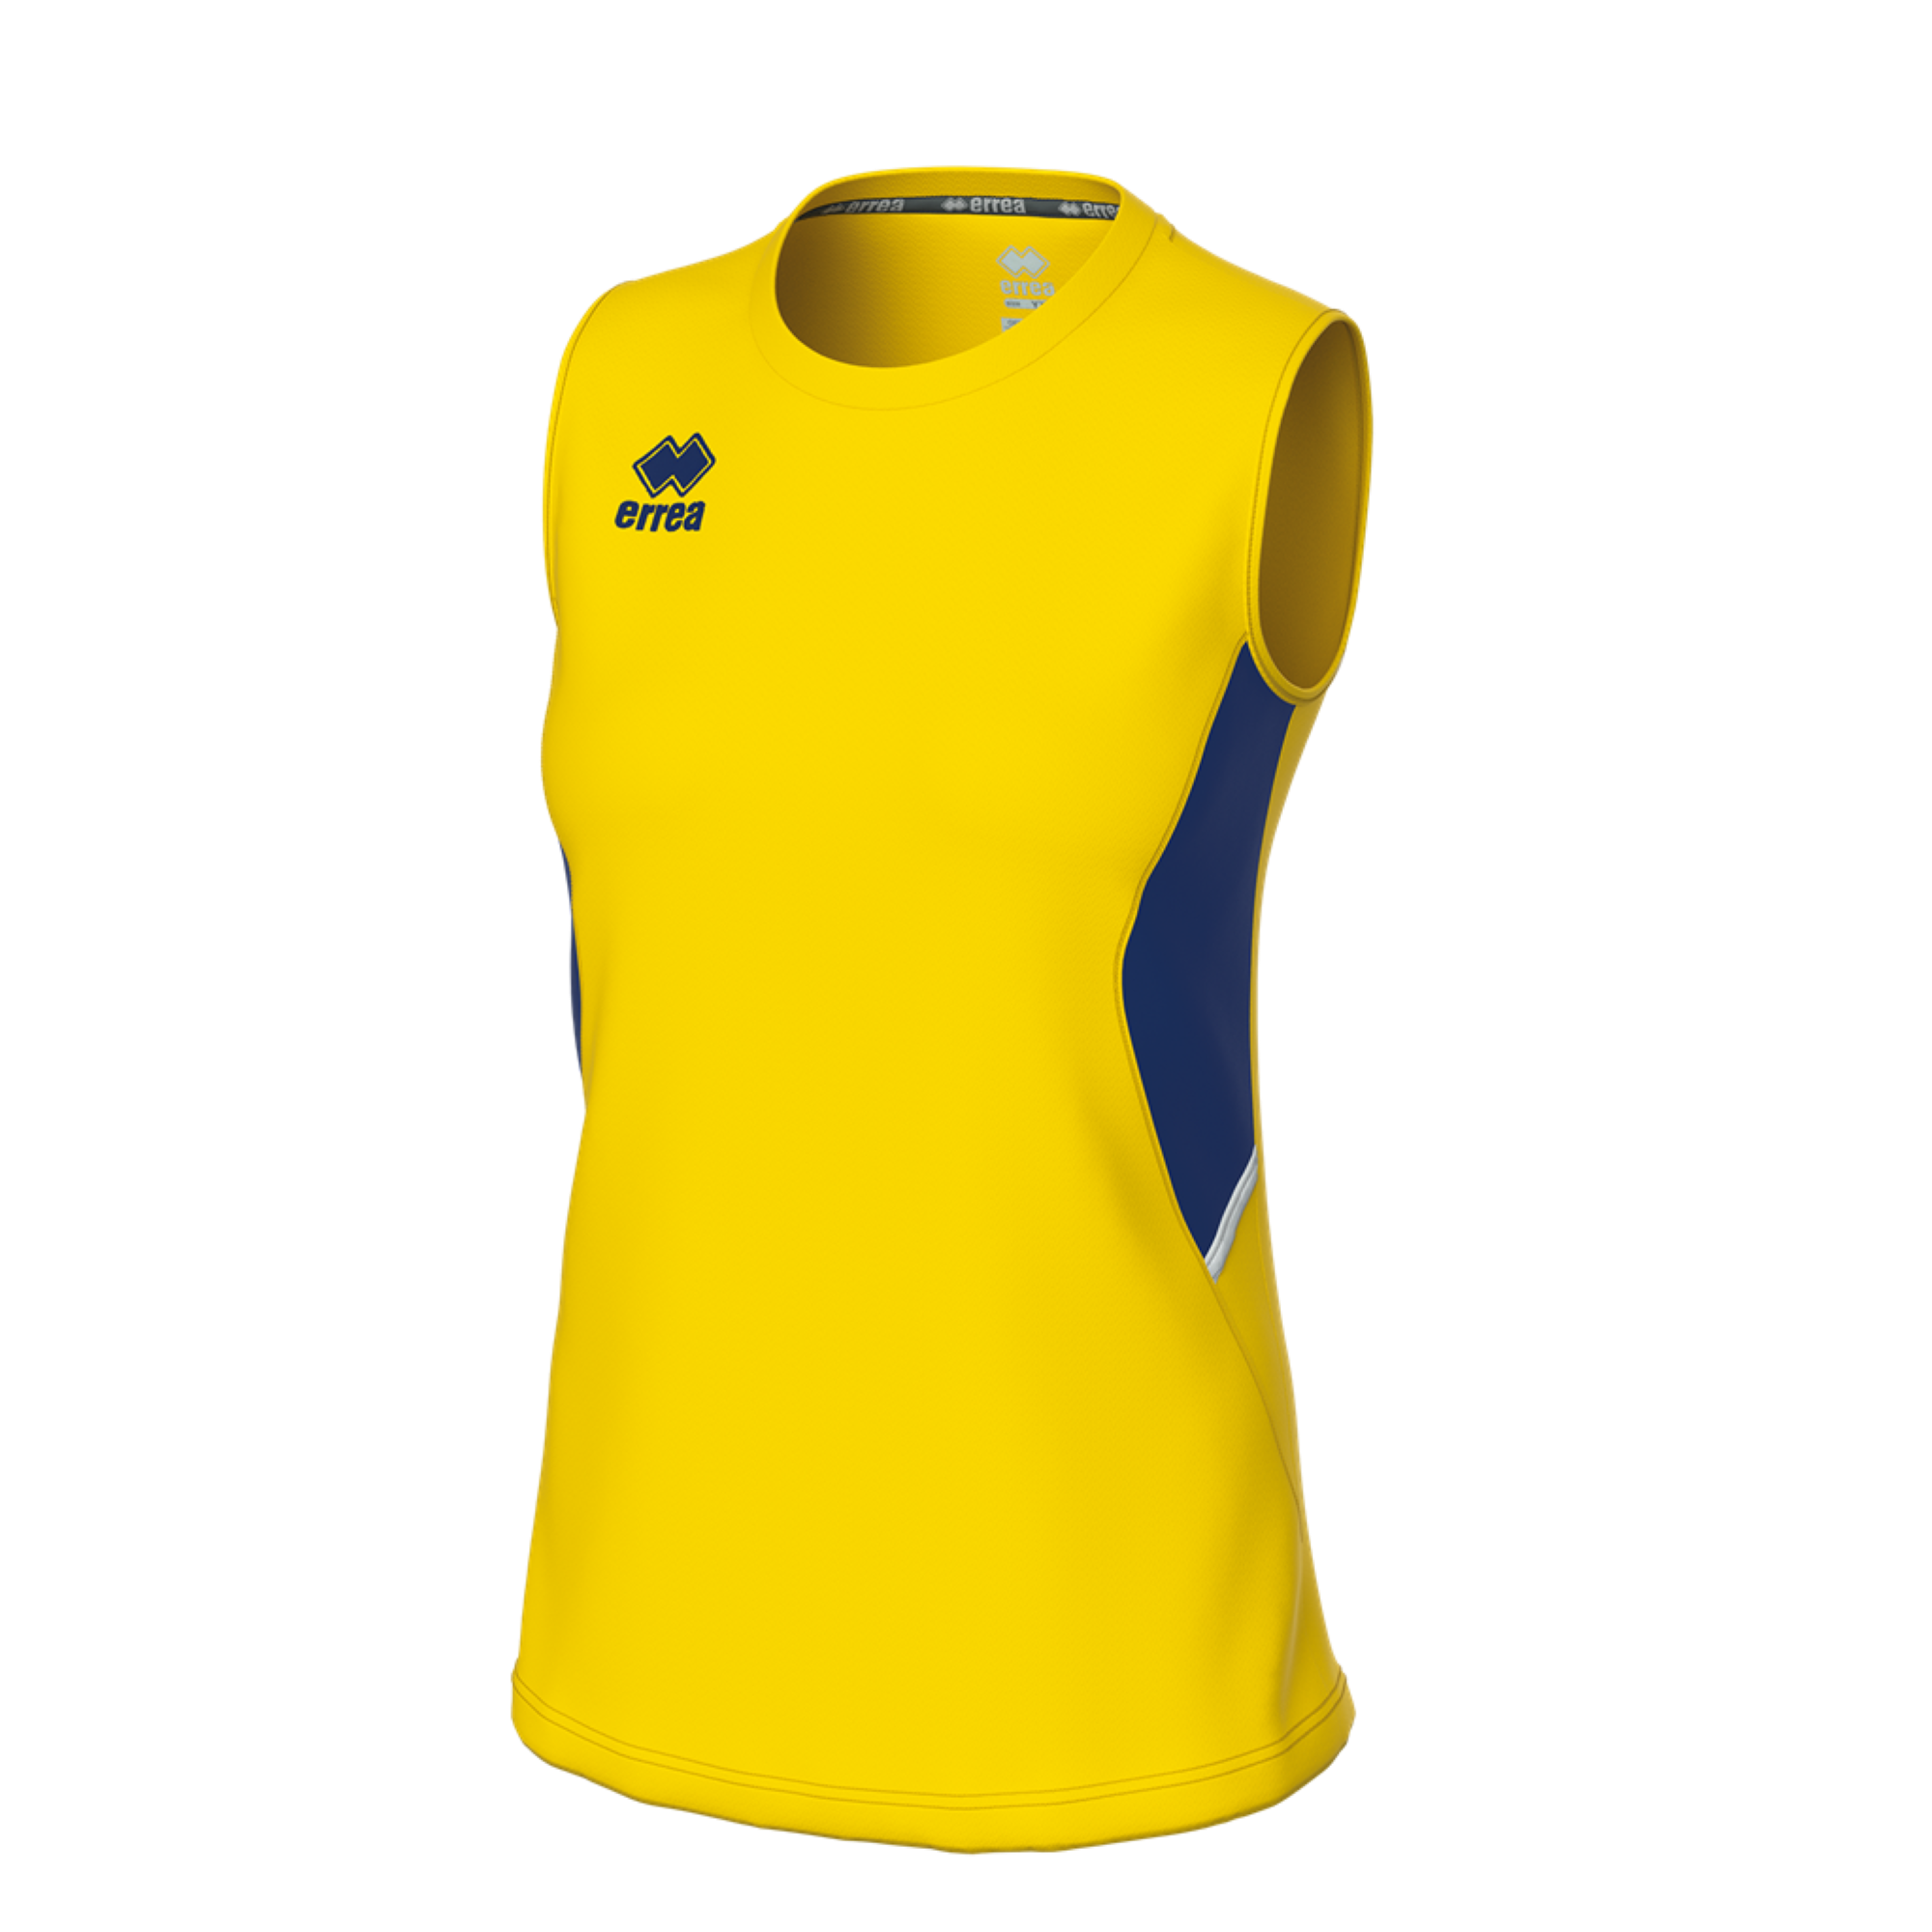 ERREA dámské dresové triko CARRY BARVA: žlutá - modrá - bílá, Velikost: S